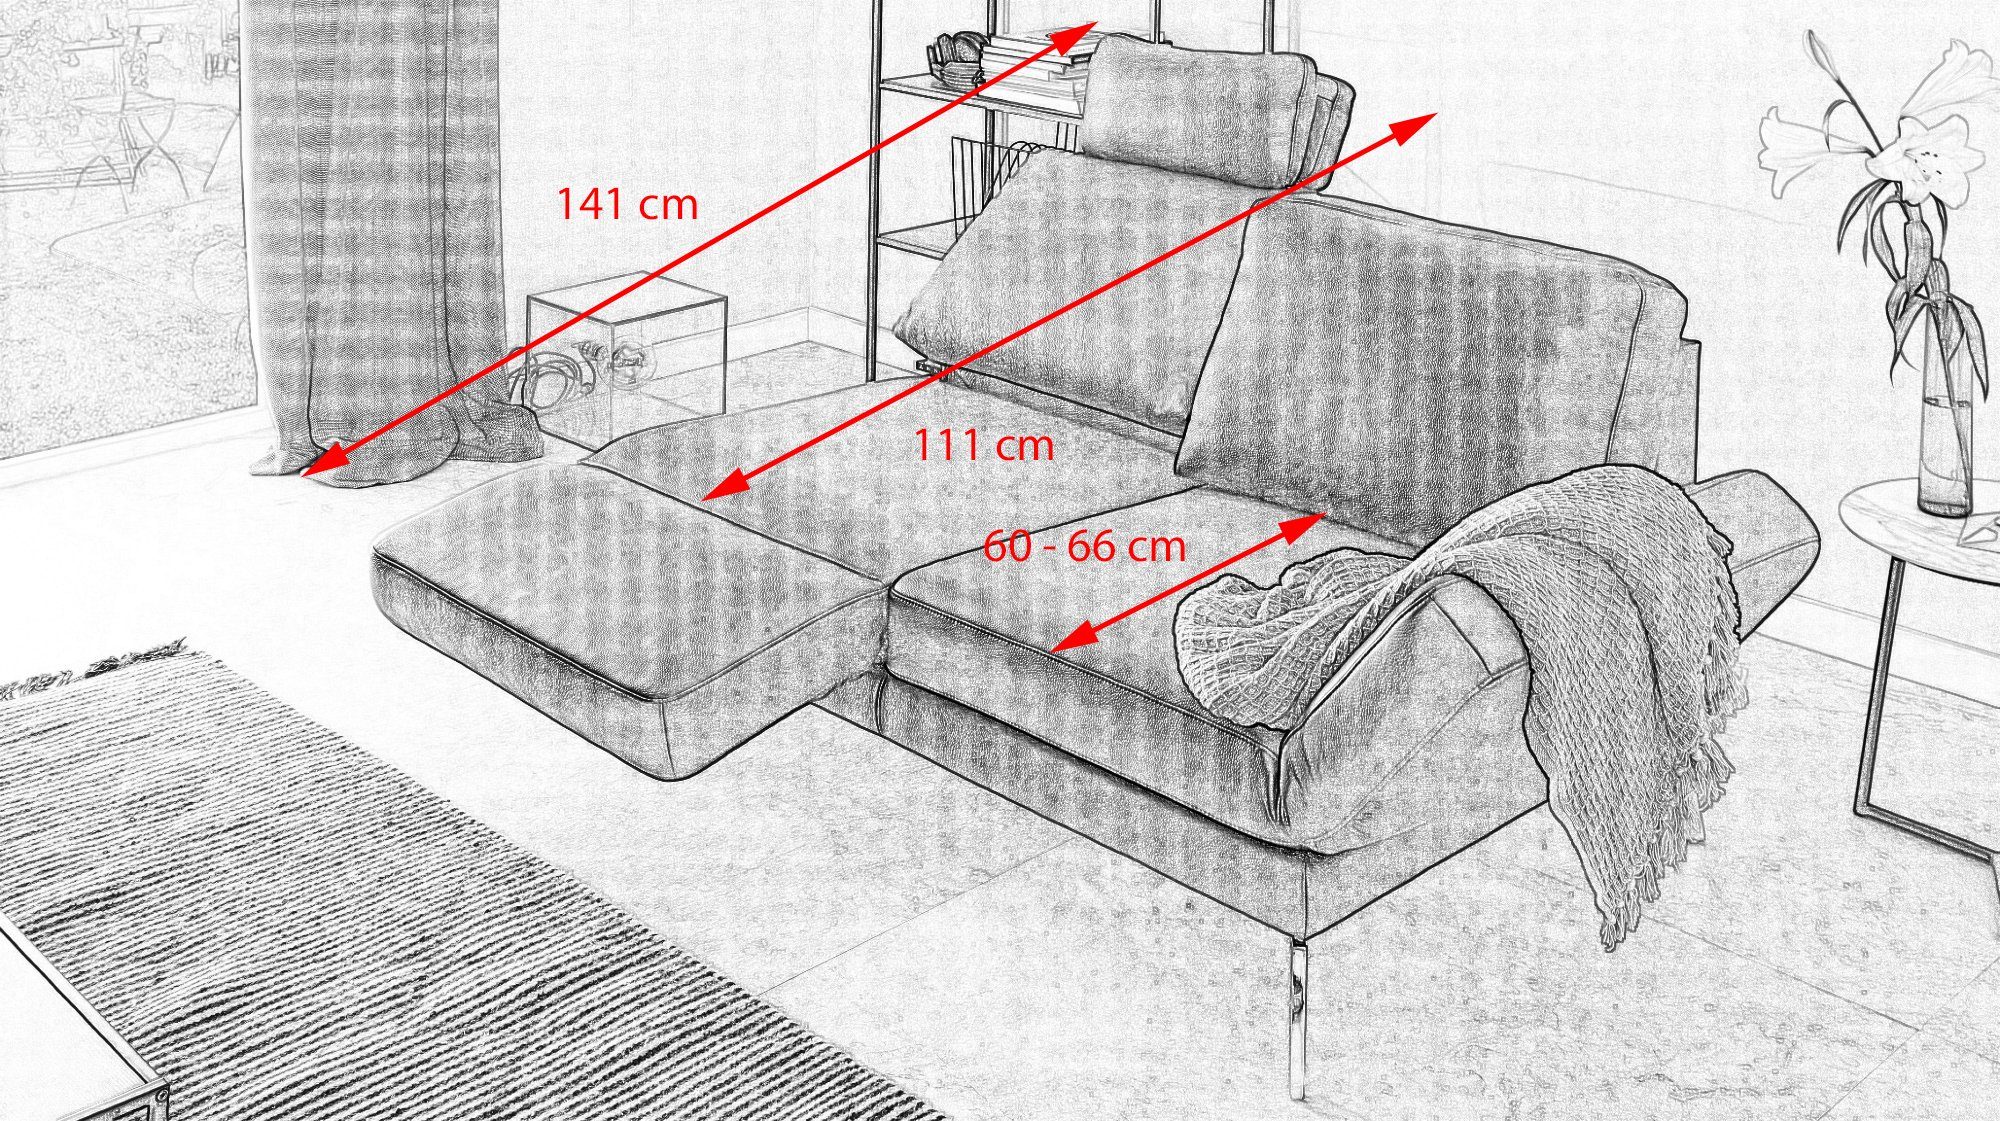 KAWOLA 2-Sitzer verschiedene braun HURRICANE, Leder Farben Sofa